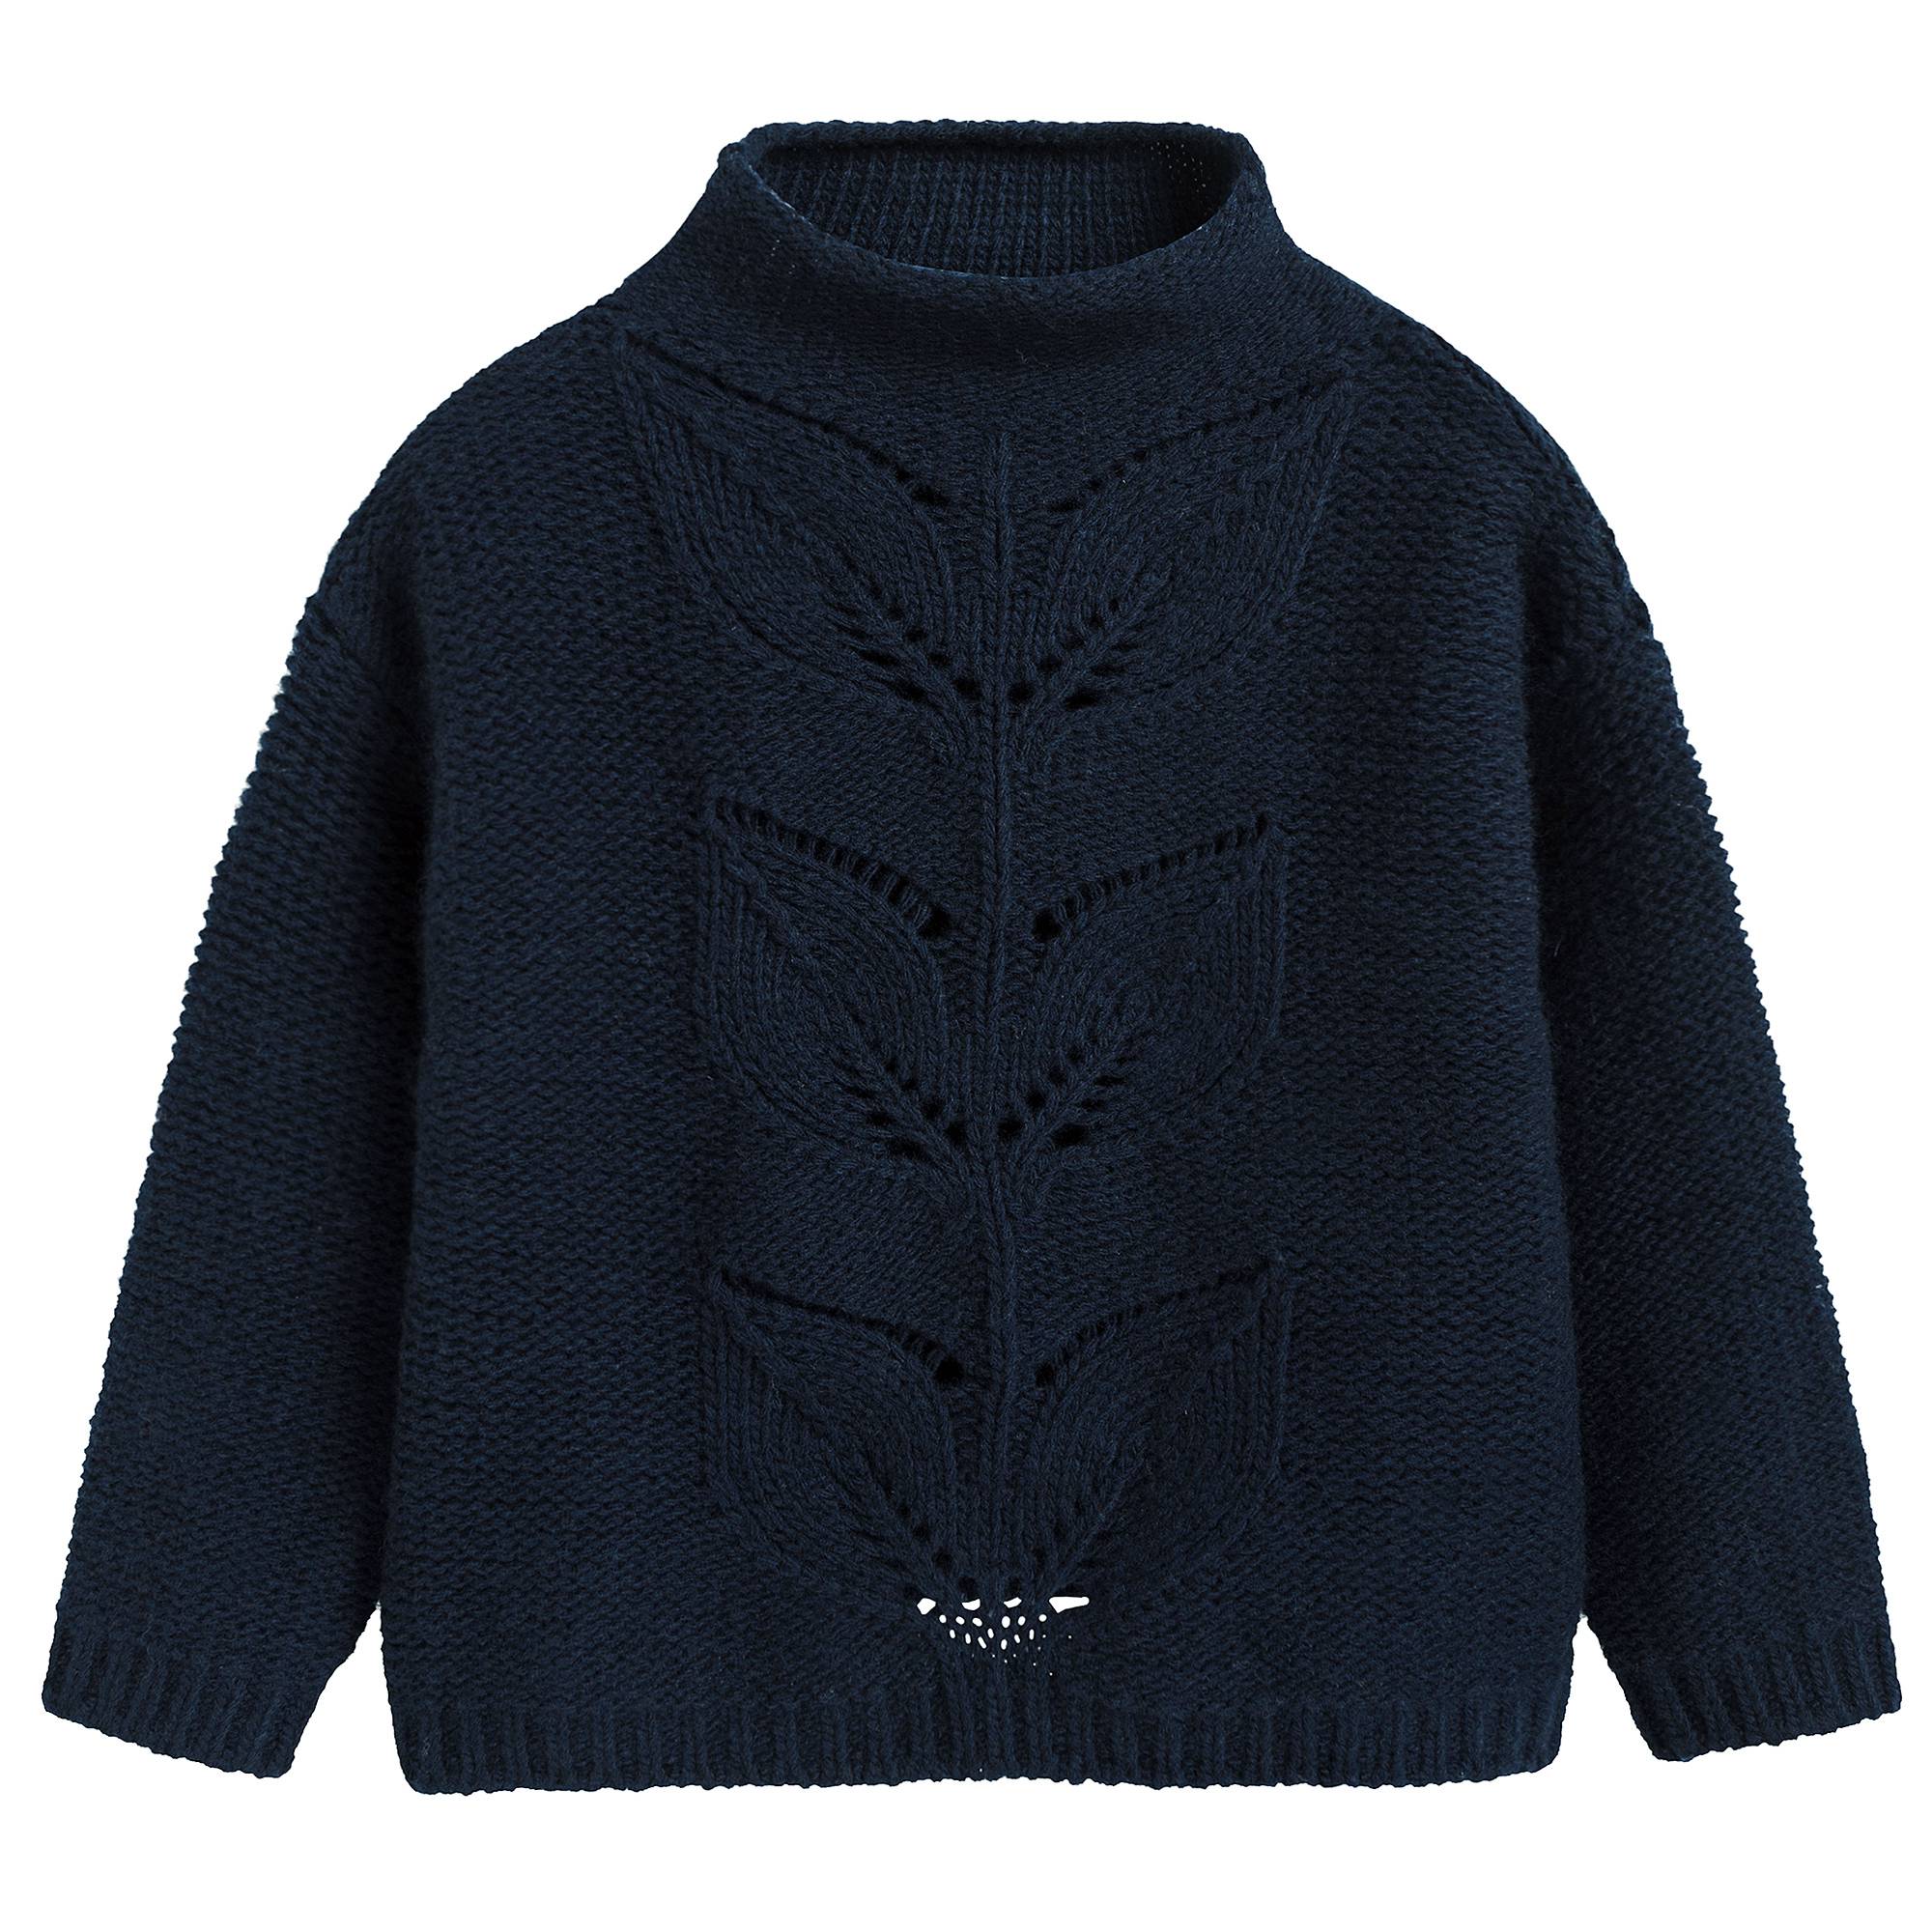 Girls Navy Blue Wool Sweater Leaves Hollow